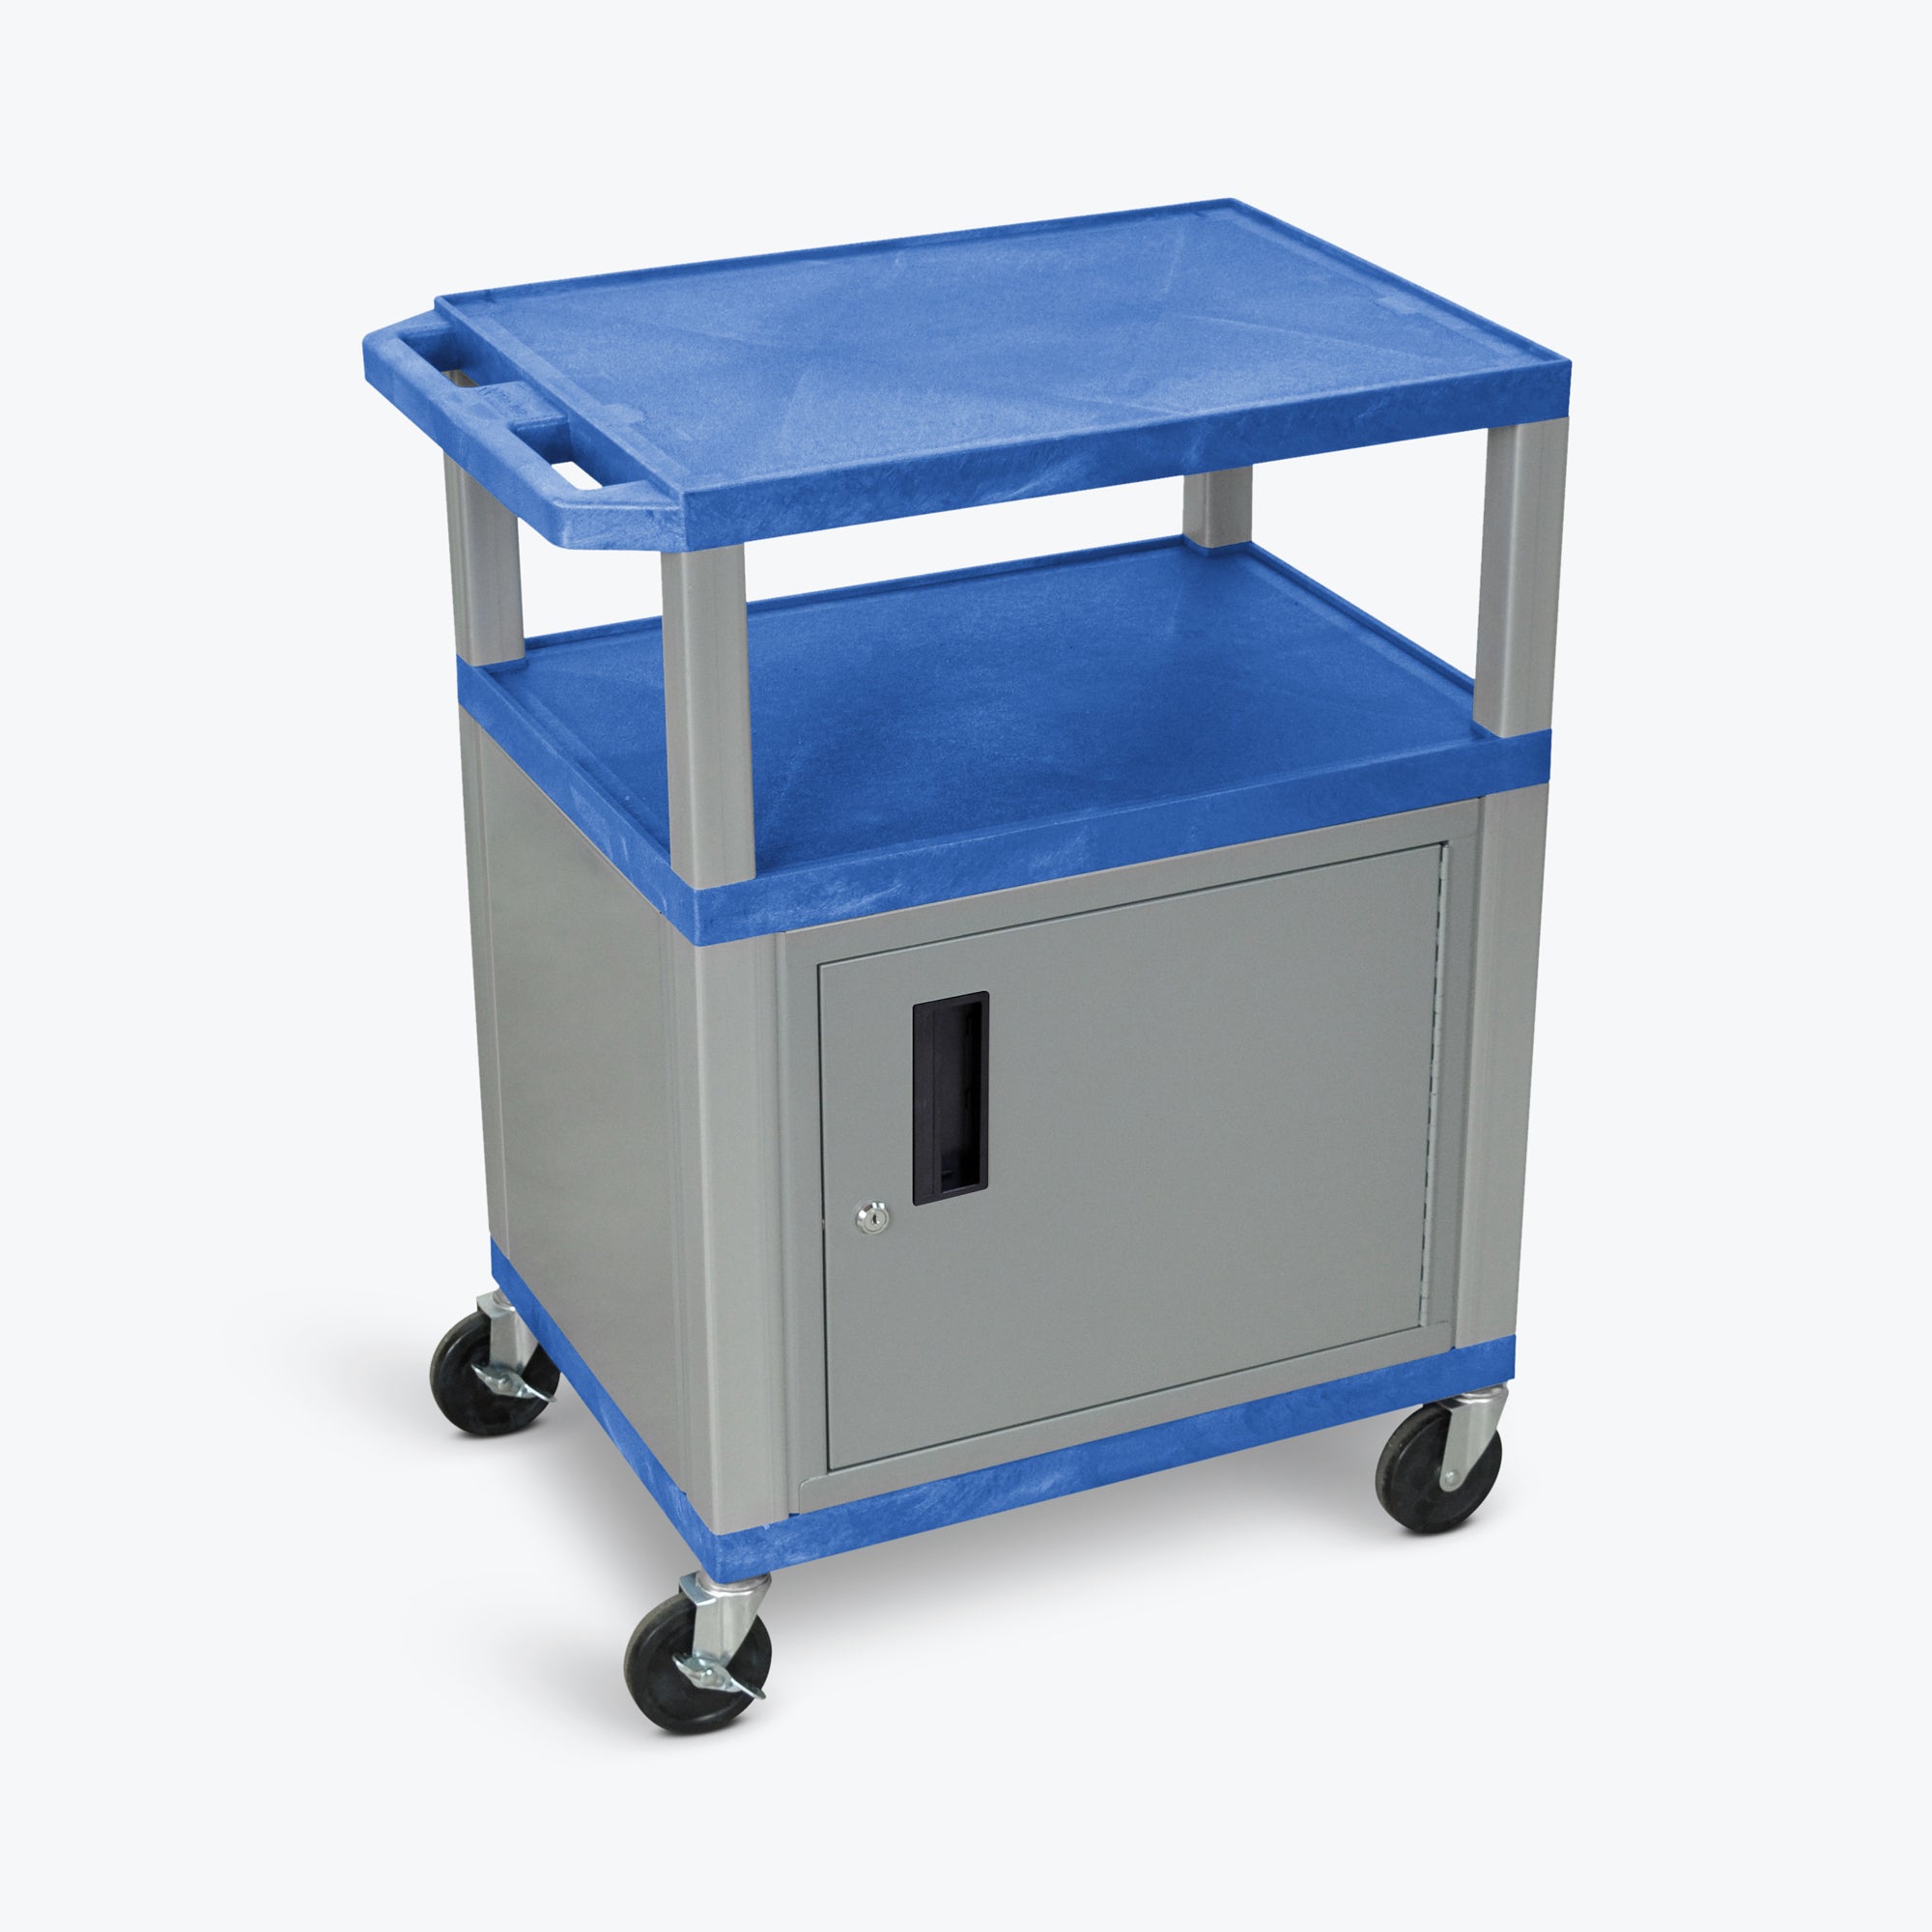 Luxor 34" 3-Shelf Tuffy AV Cart with Electric Assembly, Nickel Cabinet & Legs (Blue Shelves) - WT34BUC4E-N